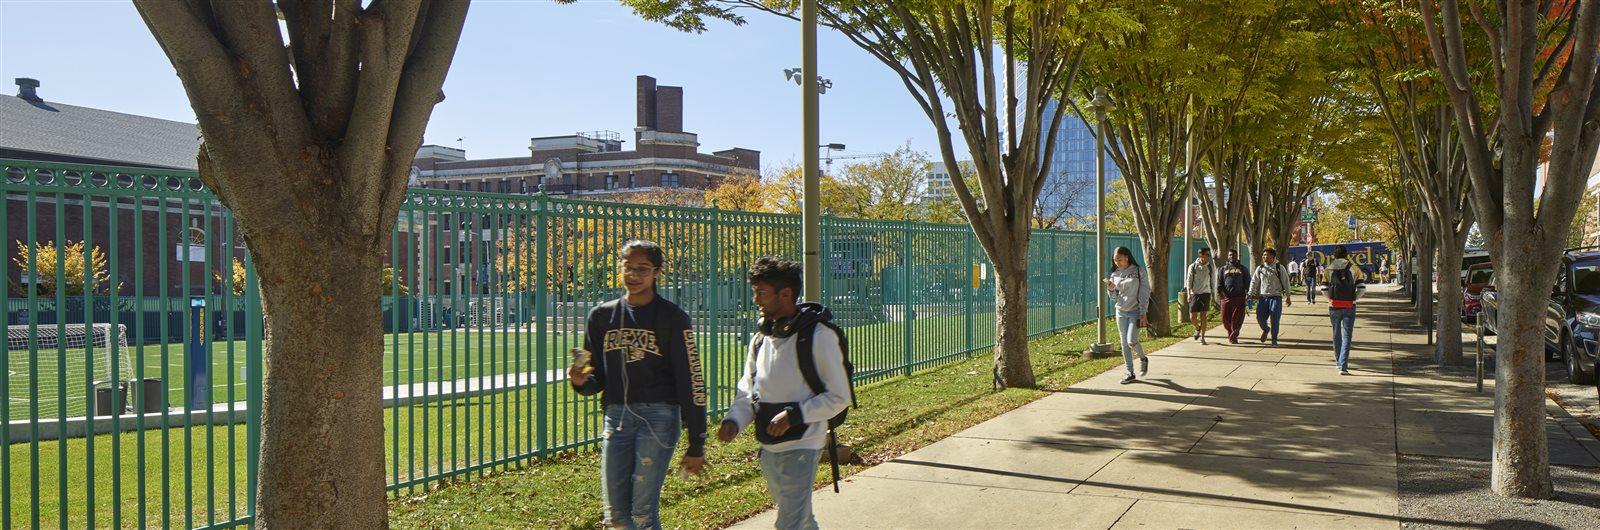 Two students walking by Buckley Recreational Field